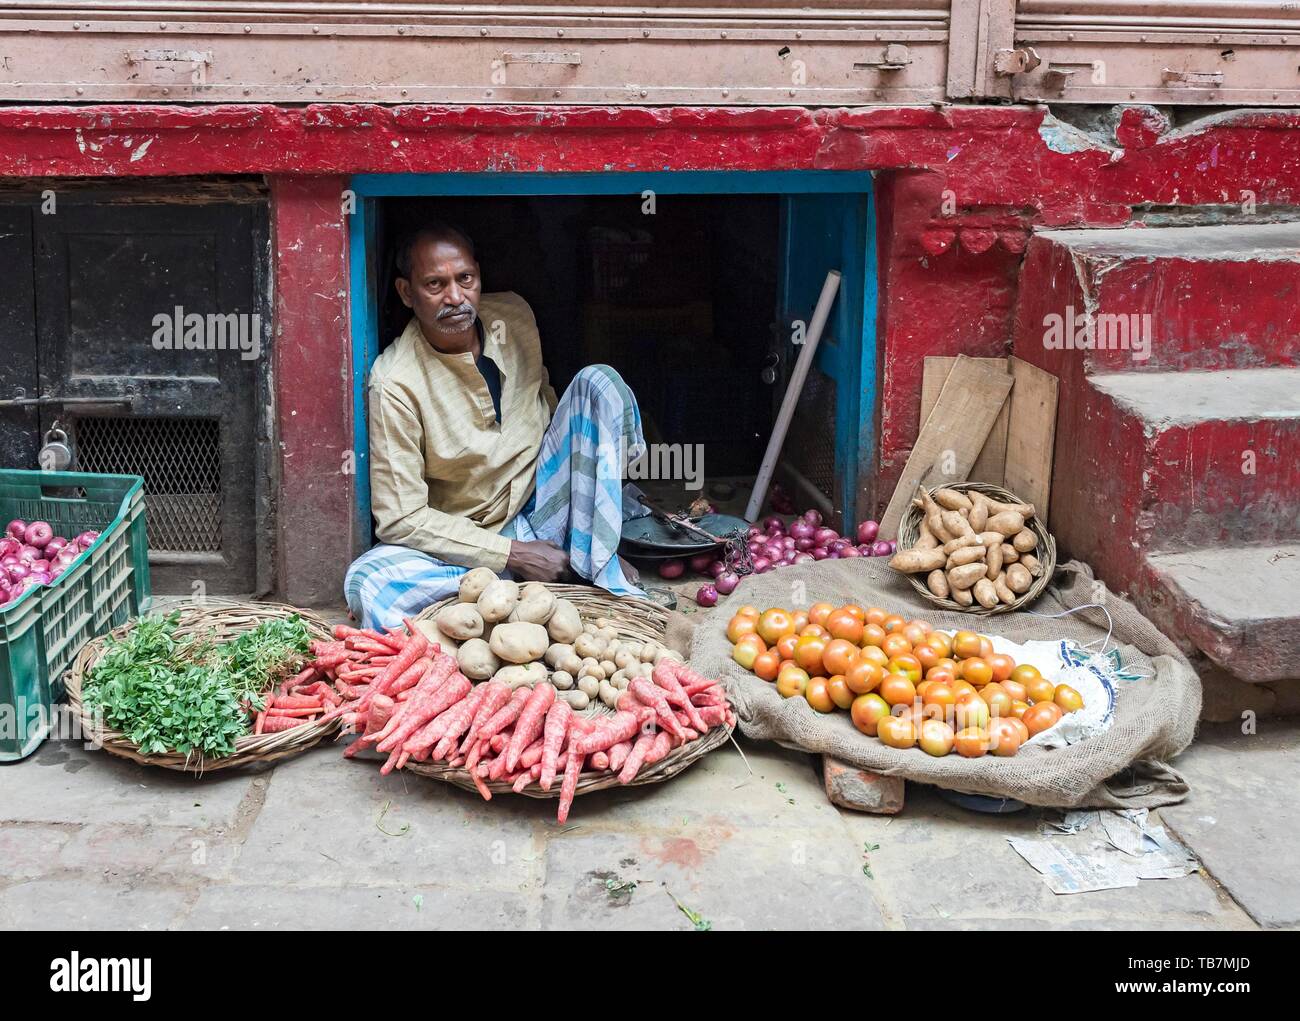 Man selling vegetables in the street market, Old City of Varanasi, Uttar Pradesh, India Stock Photo